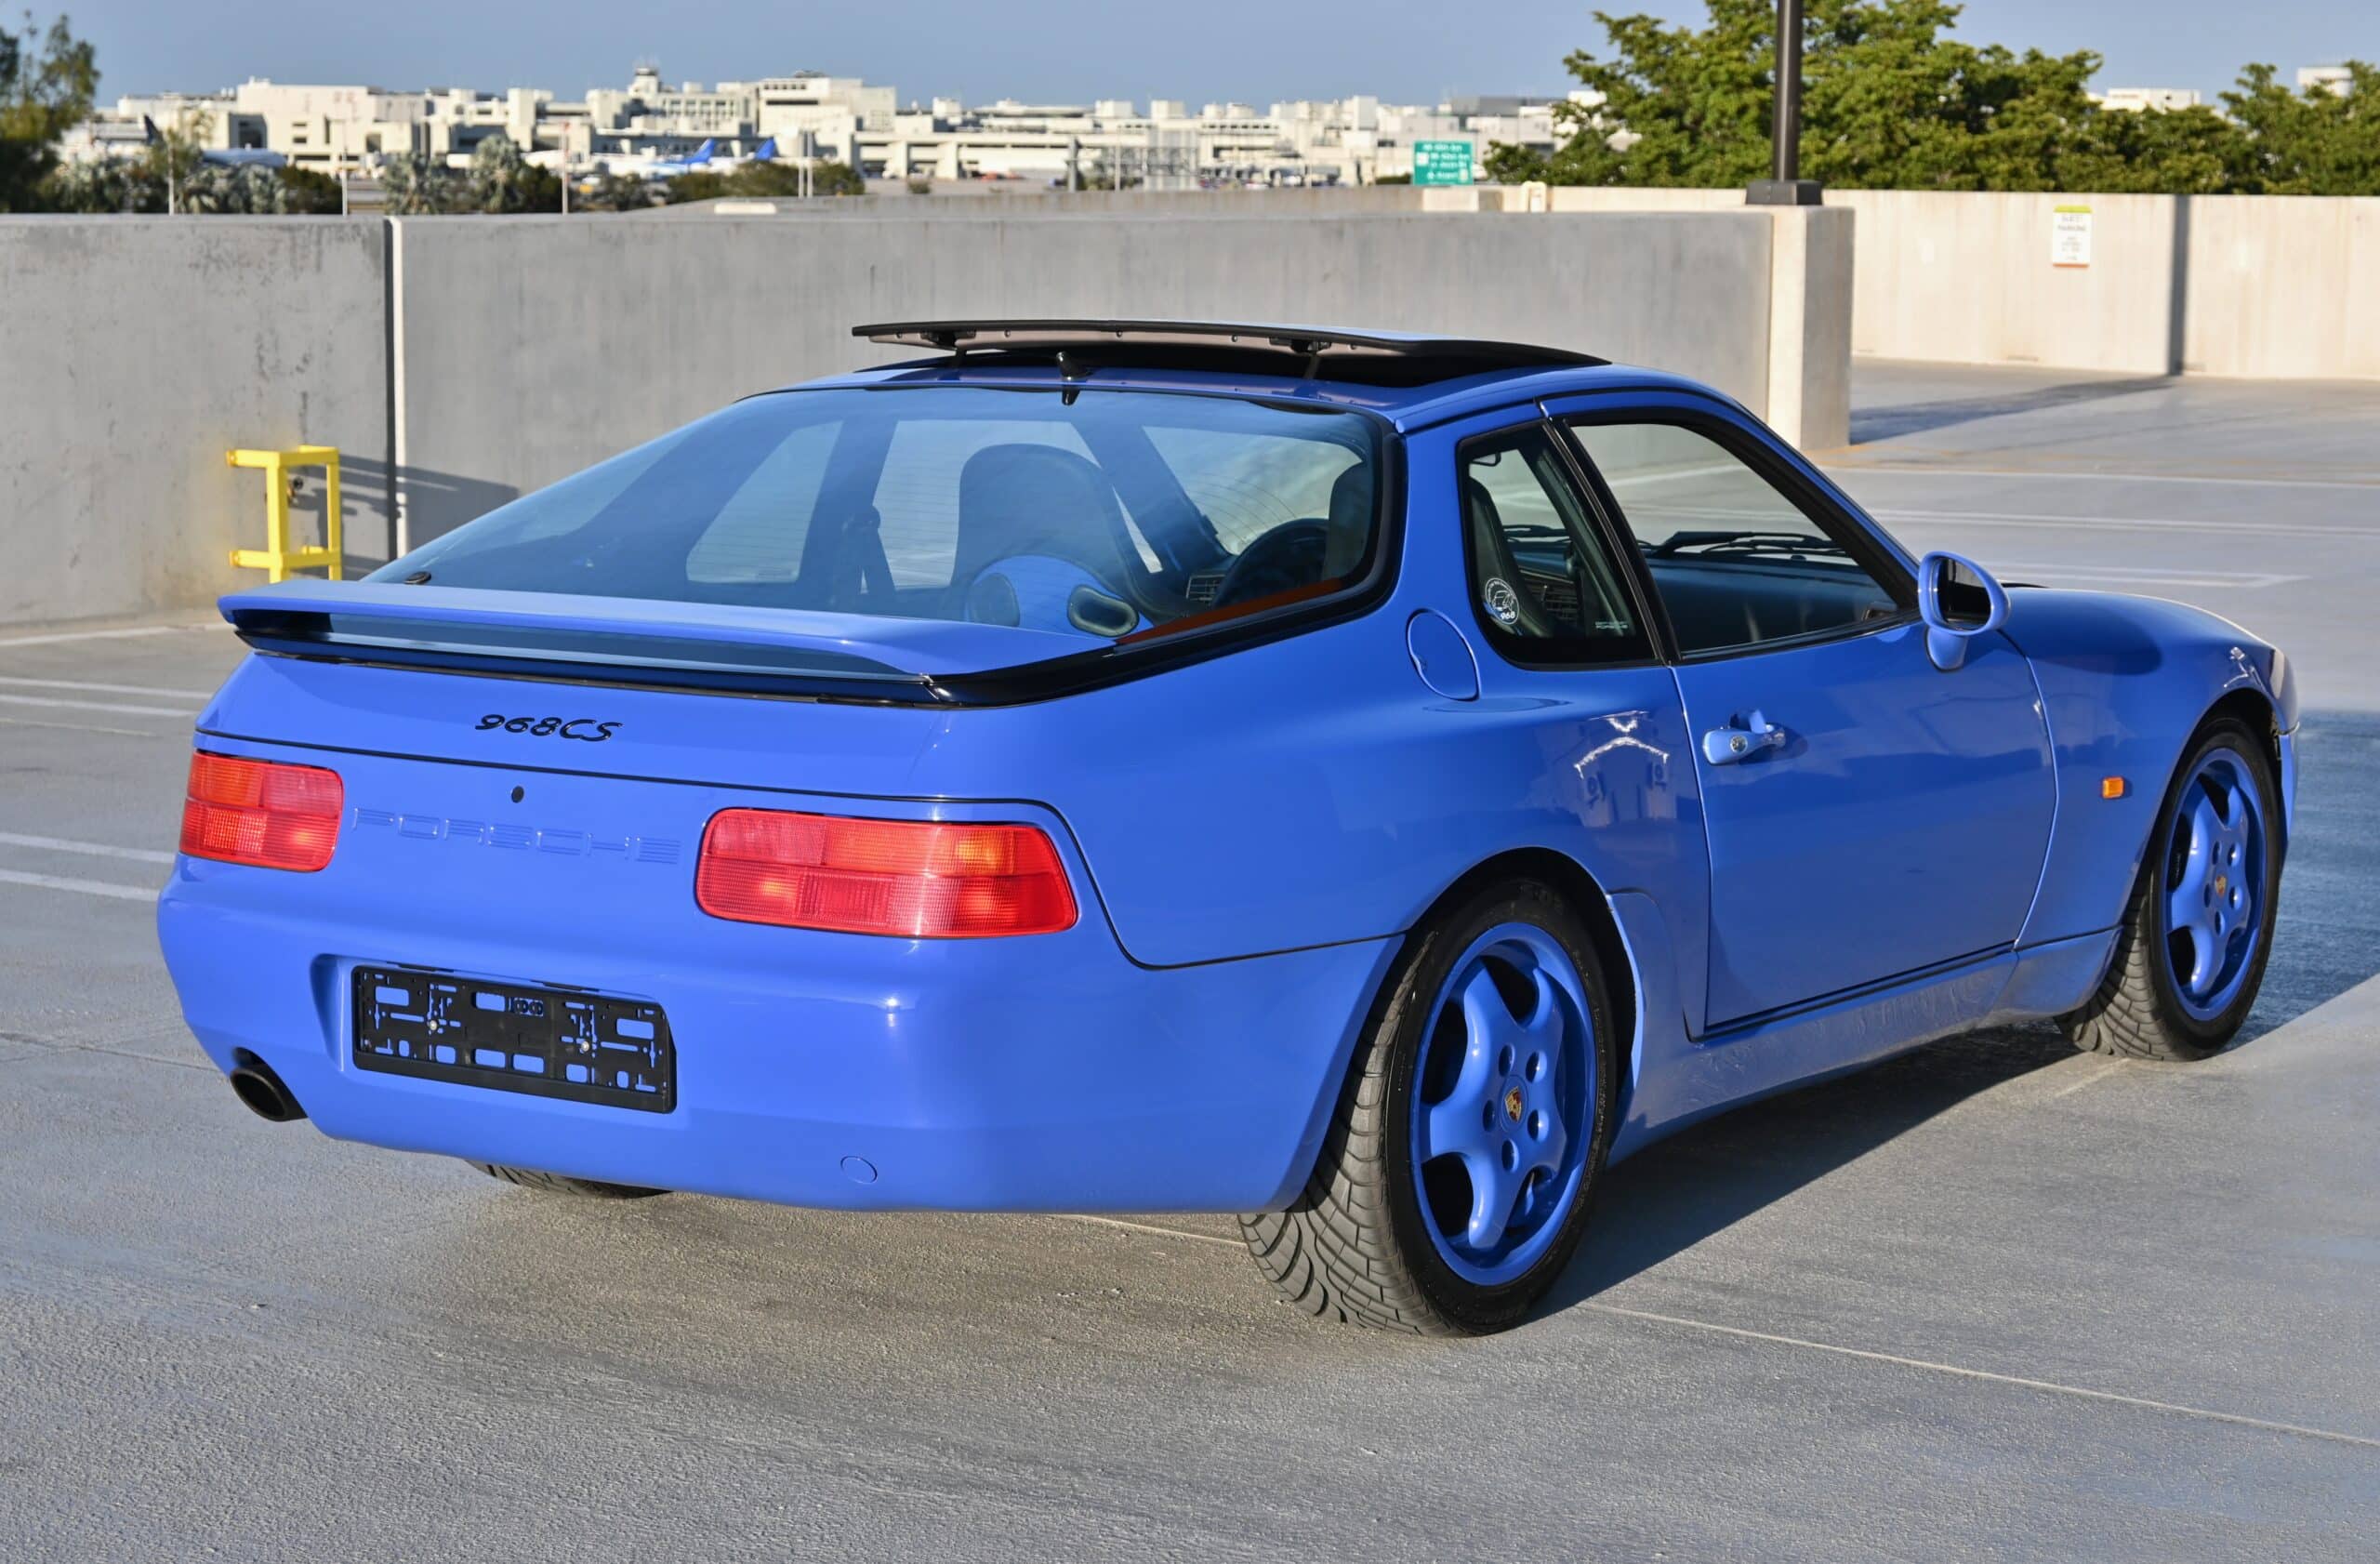 1993 Porsche 968 Club Sport 1 of only 1900 CS 968 ever made – Maritime Blue – Euro Spec – 41k Miles